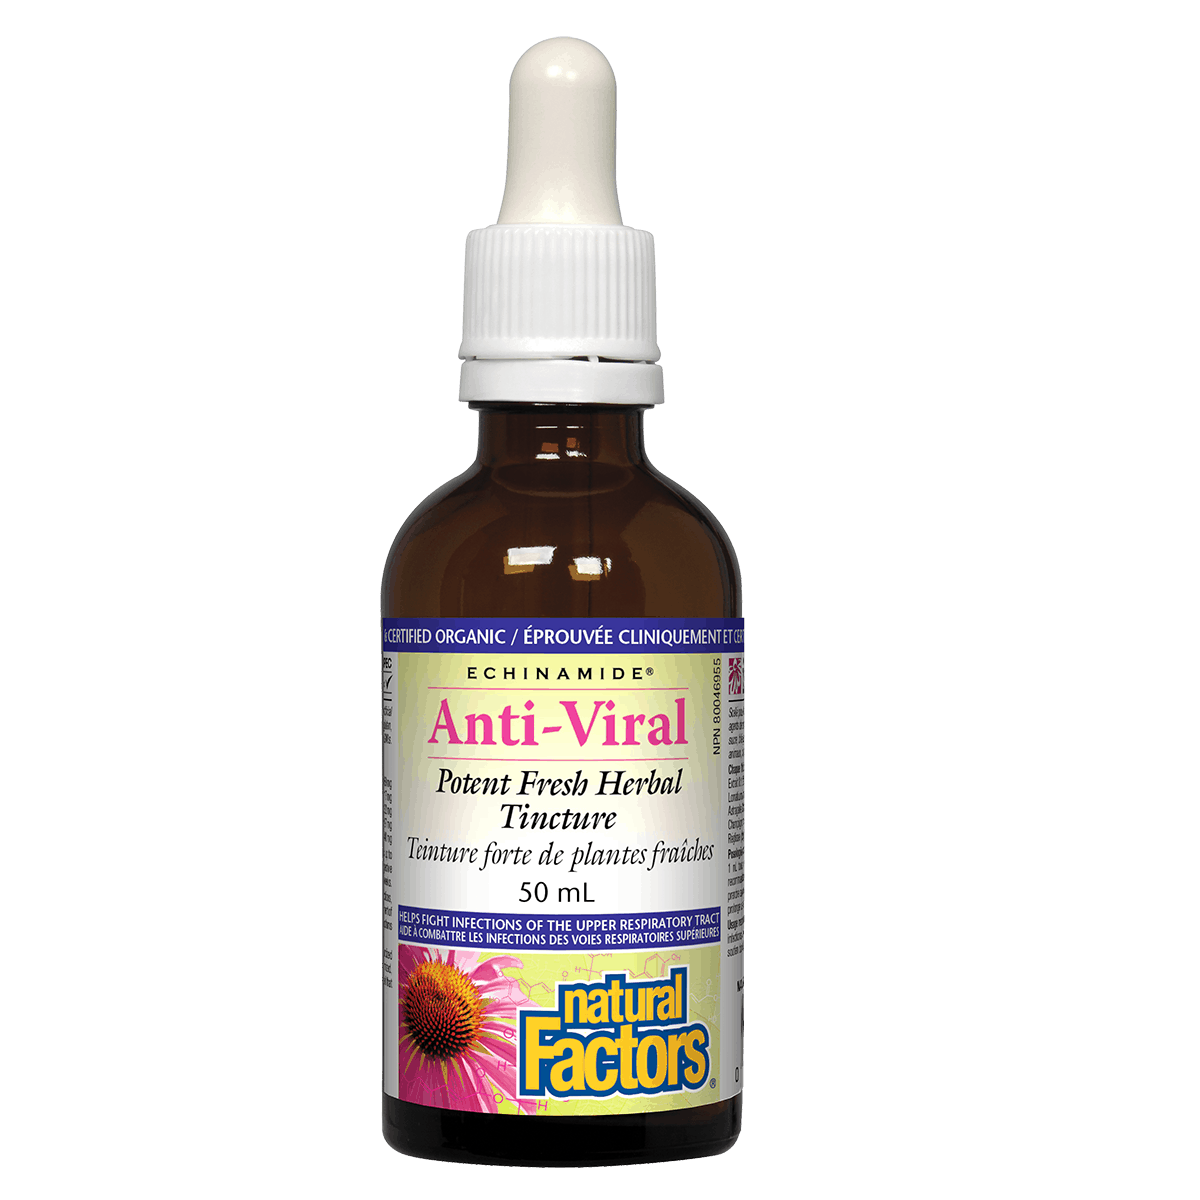 Natural Factors - Echinamide - Anti-Viral Potent Fresh Herbal Tincture - 50ml